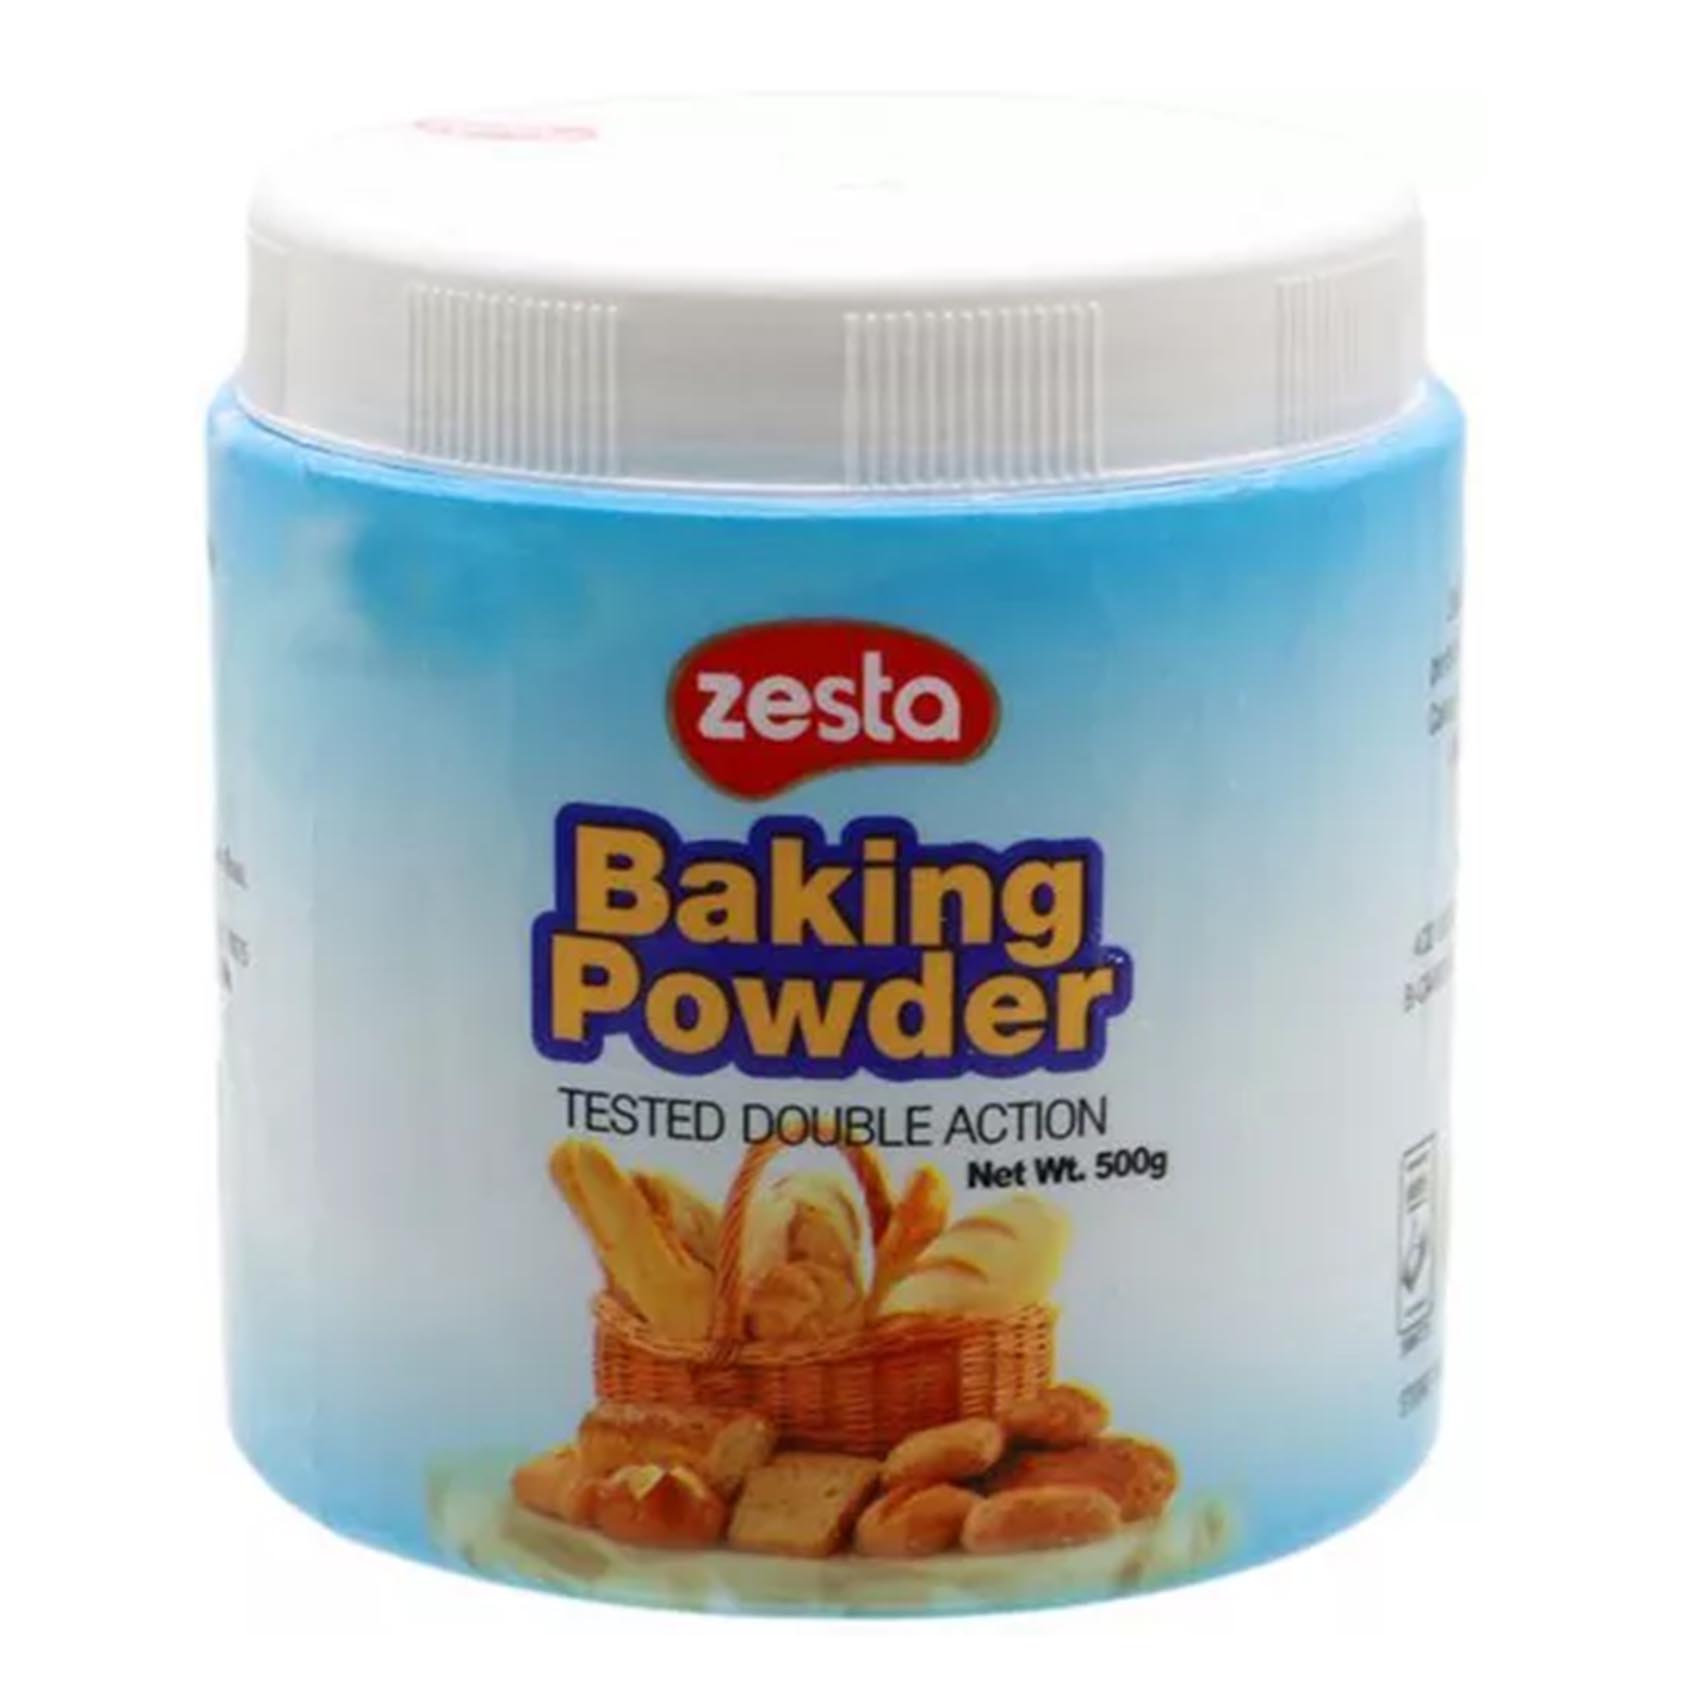 Zesta Tested Double Action Baking Powder 500g